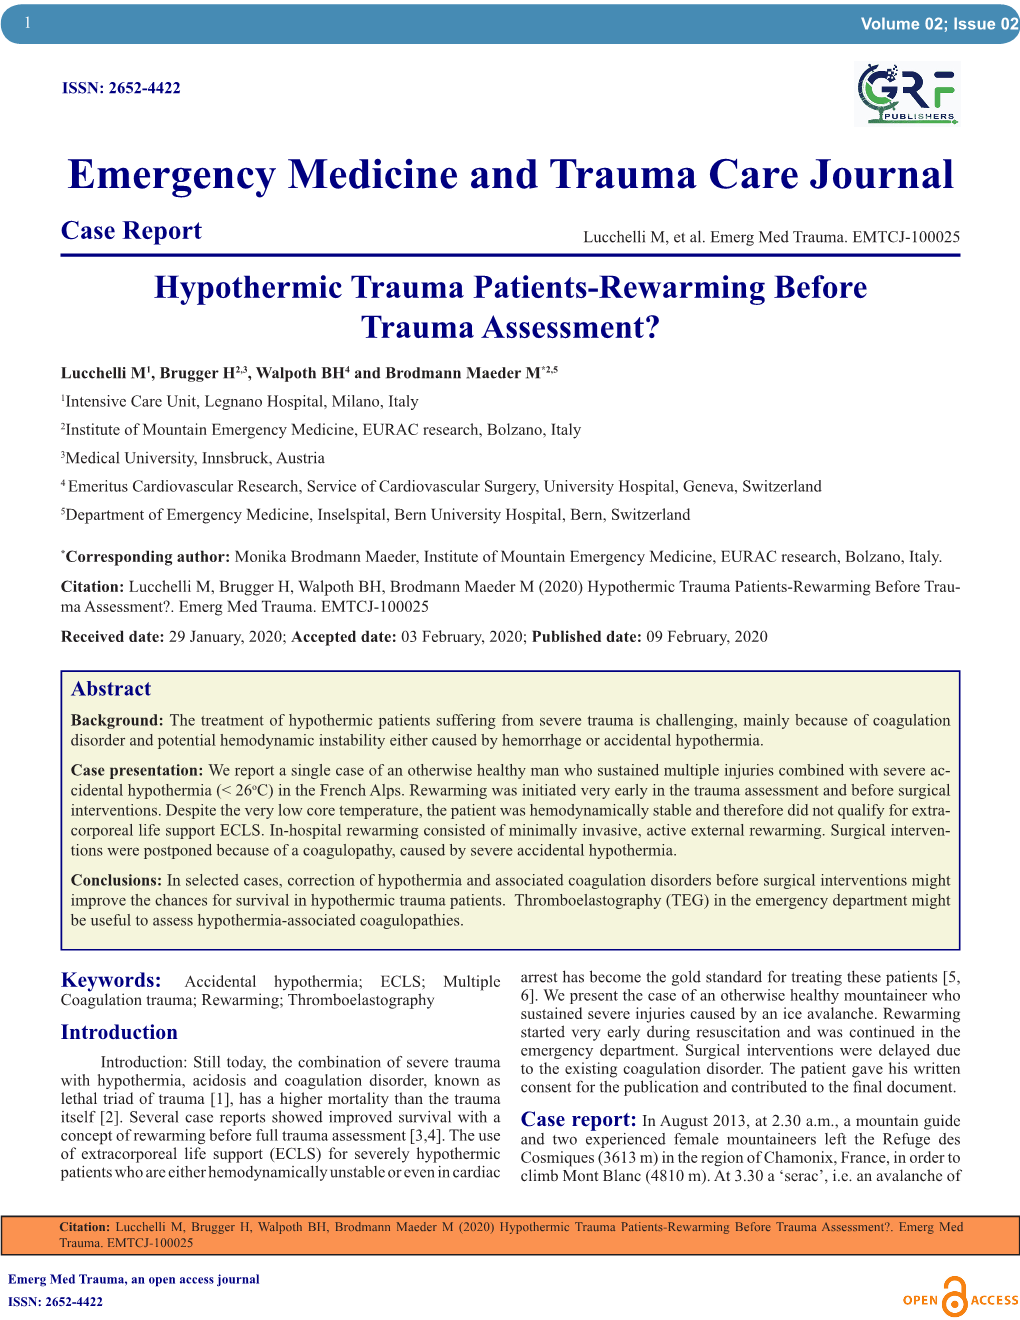 Emergency Medicine and Trauma Care Journal